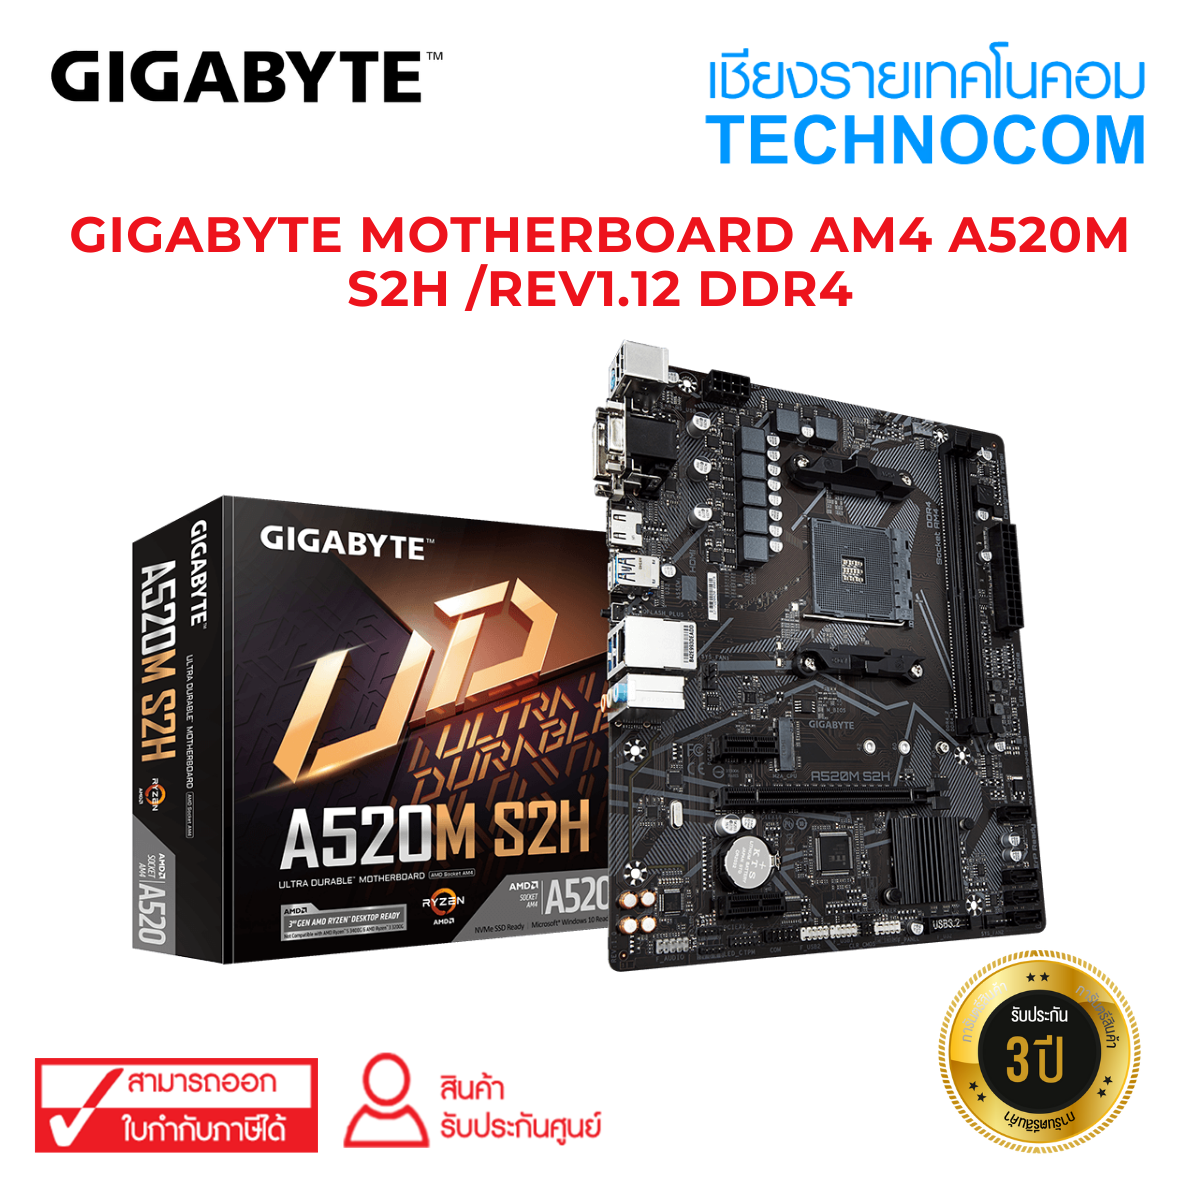 GIGABYTE MOTHERBOARD AM4 A520M S2H /REV1.12 DDR4